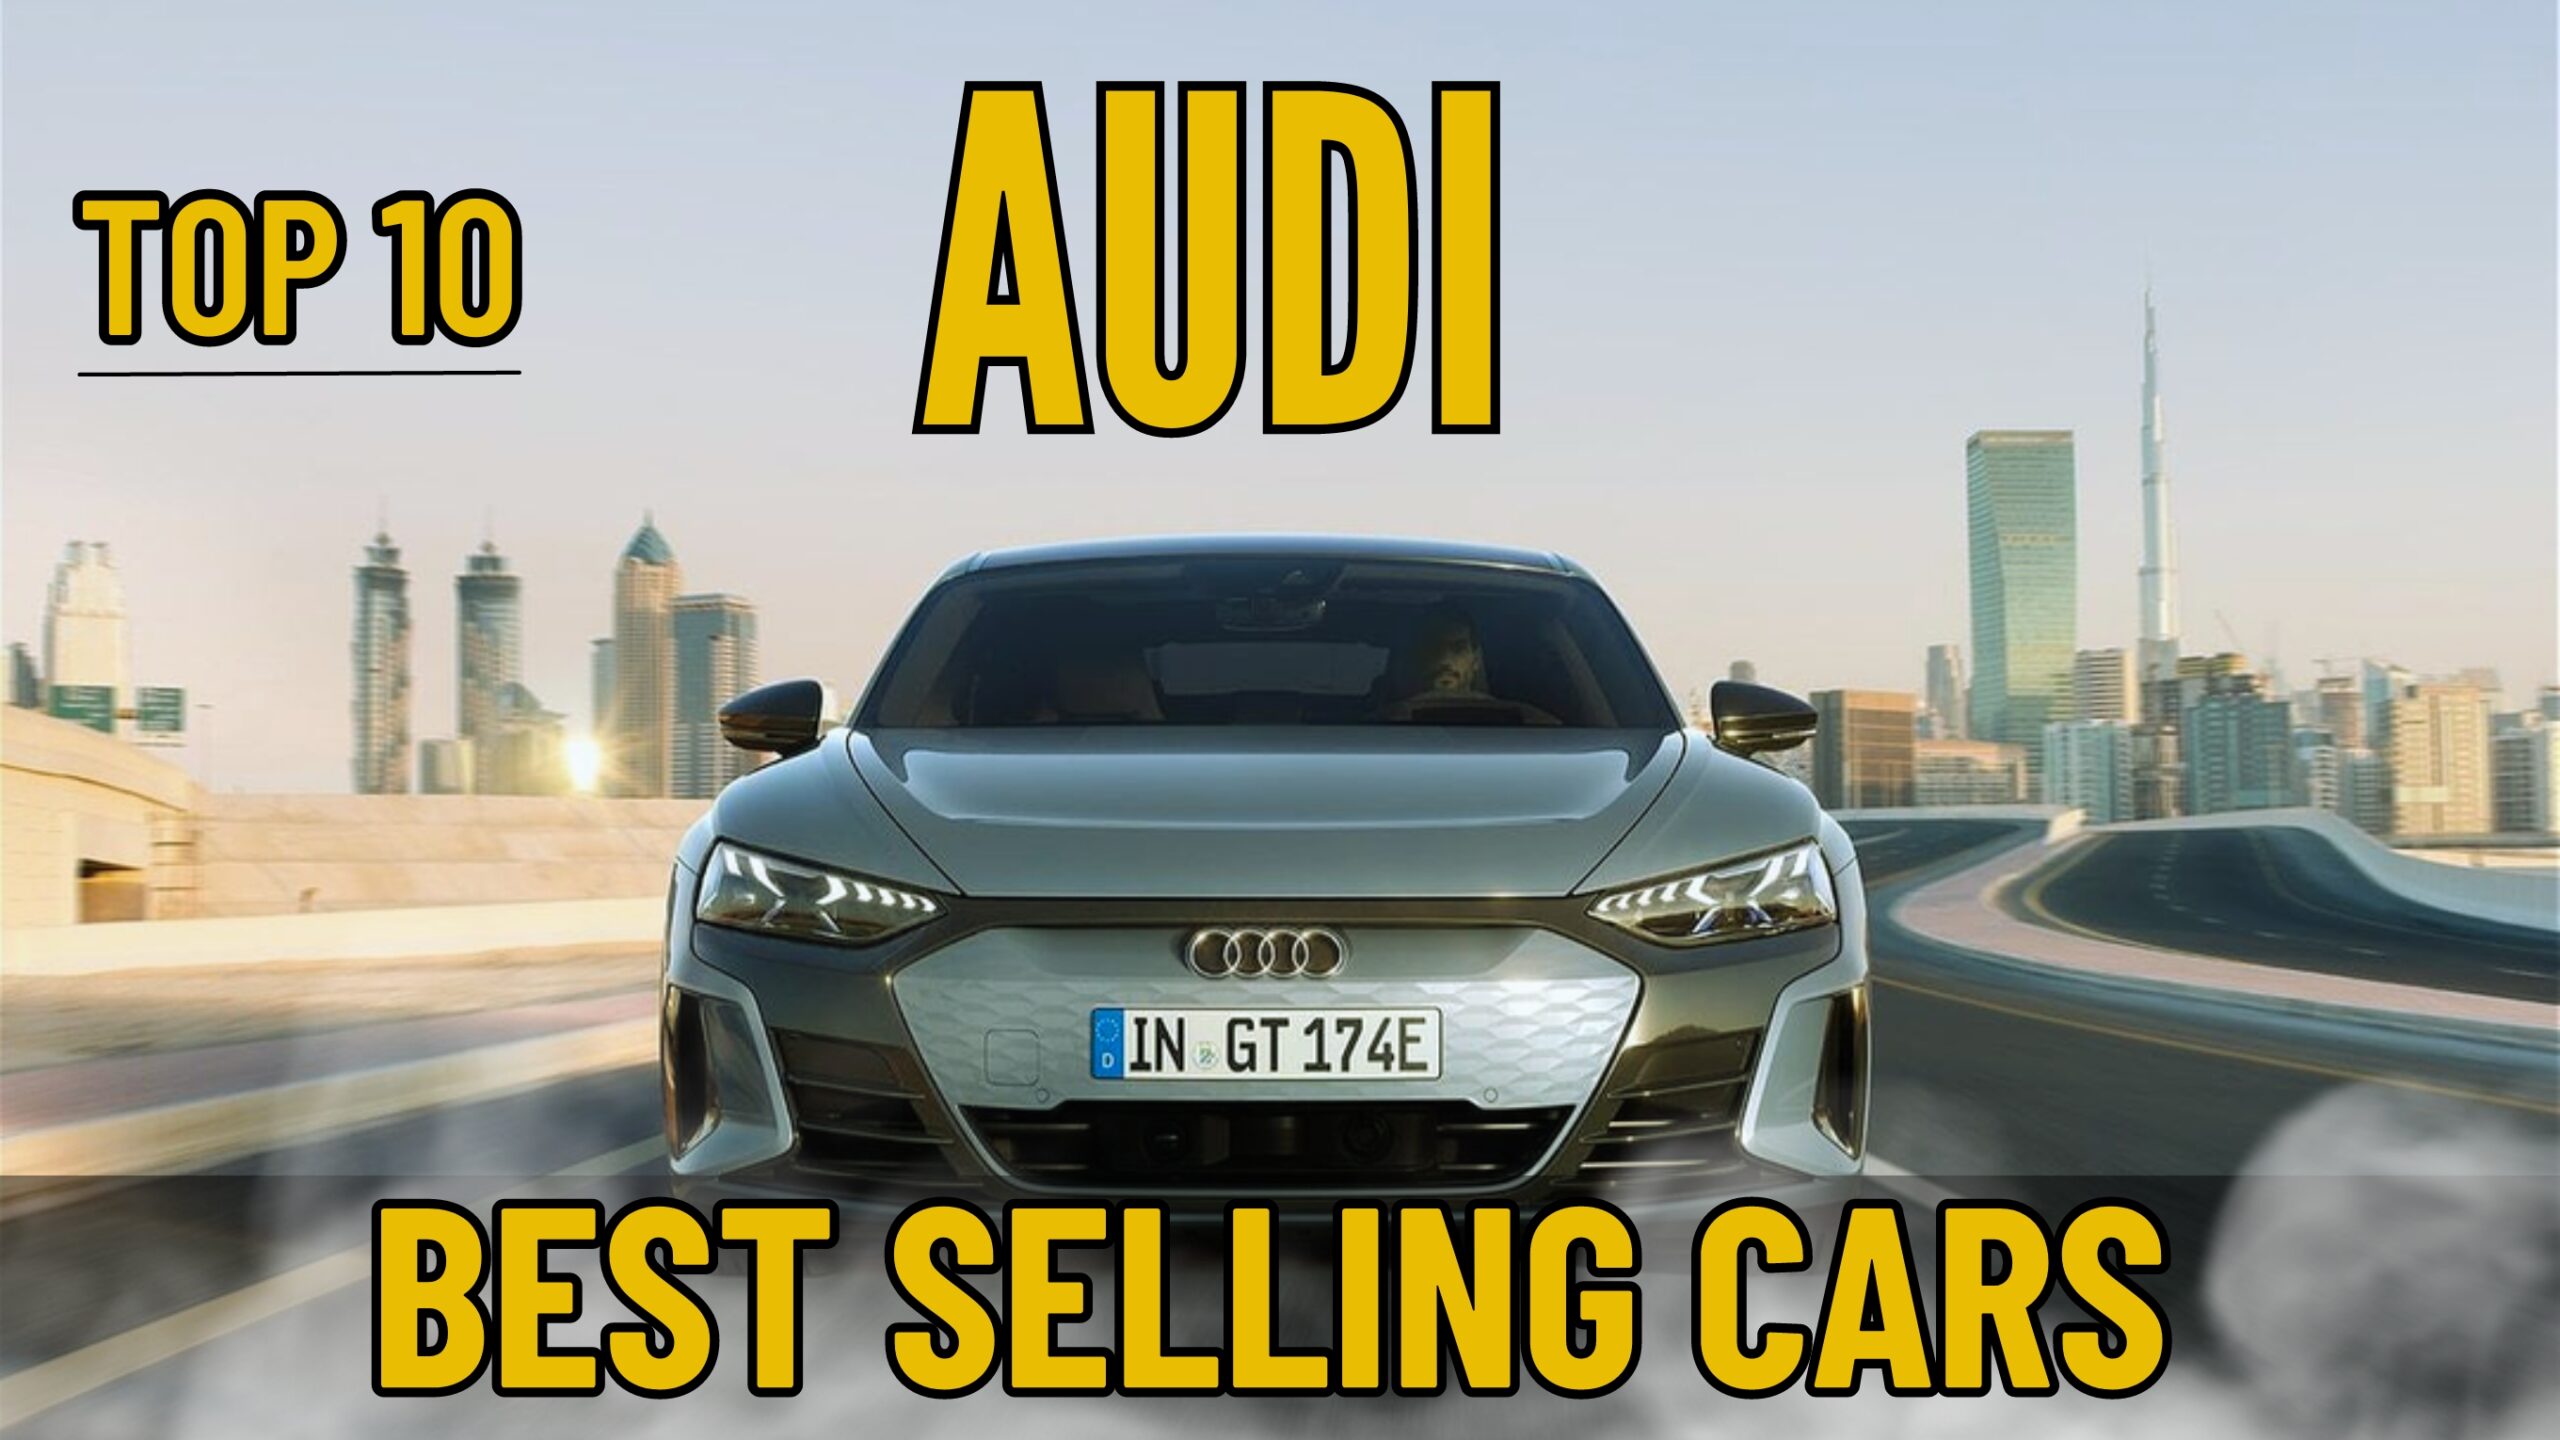 Audi Top 10 Best Selling Cars